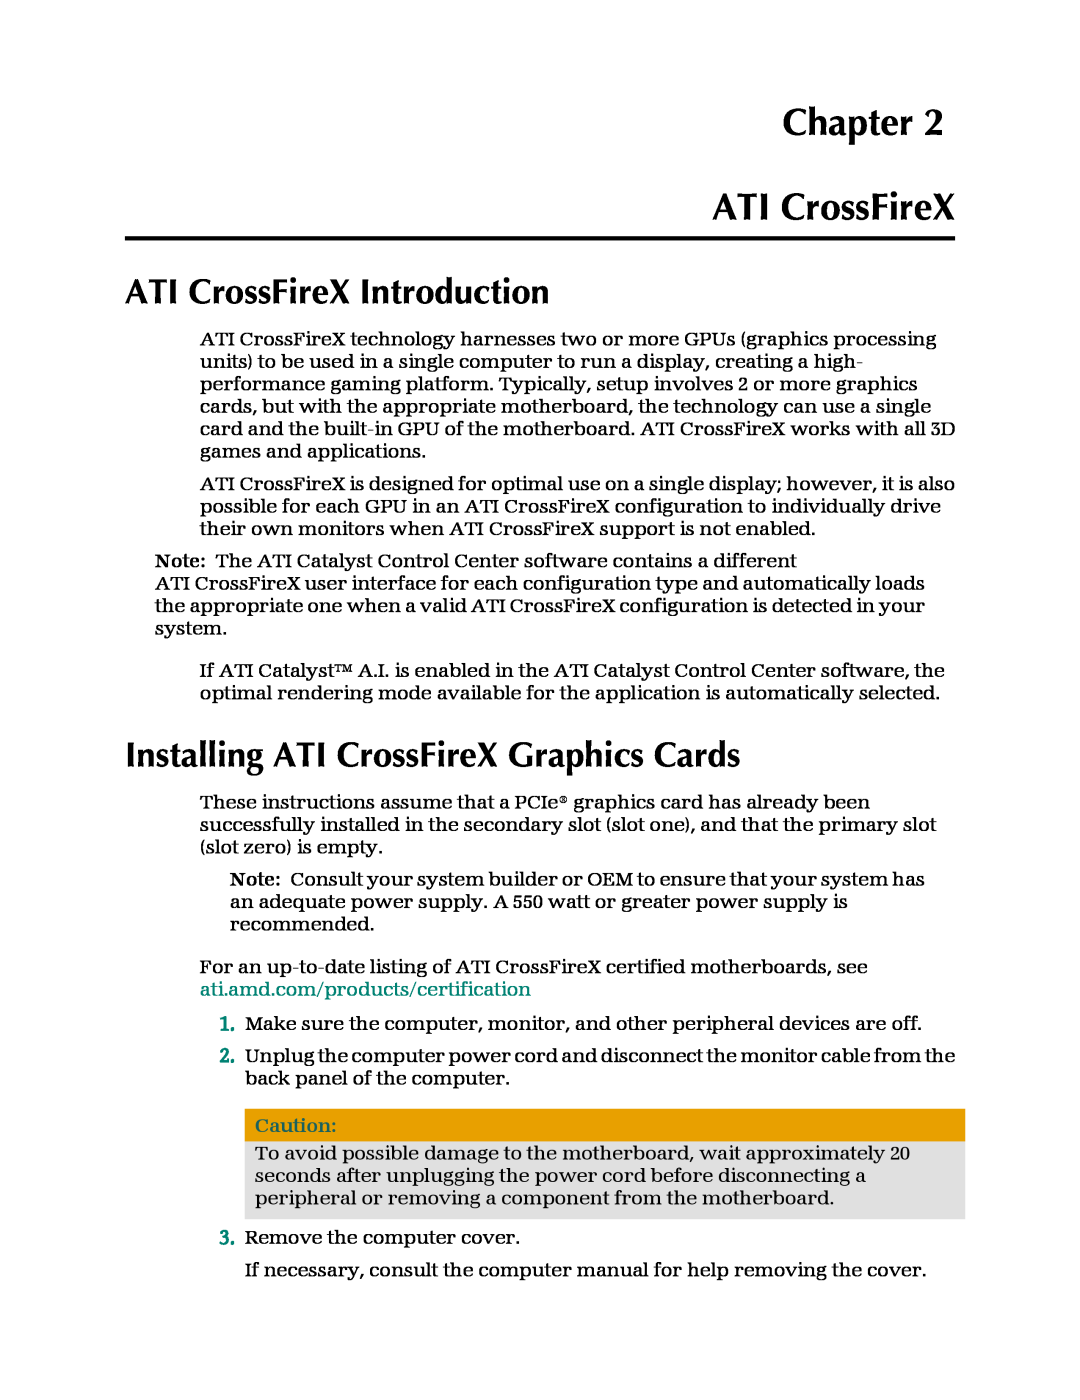 AMD HD 3800 manual Chapter ATI CrossFireX, ATI CrossFireX Introduction, Installing ATI CrossFireX Graphics Cards 